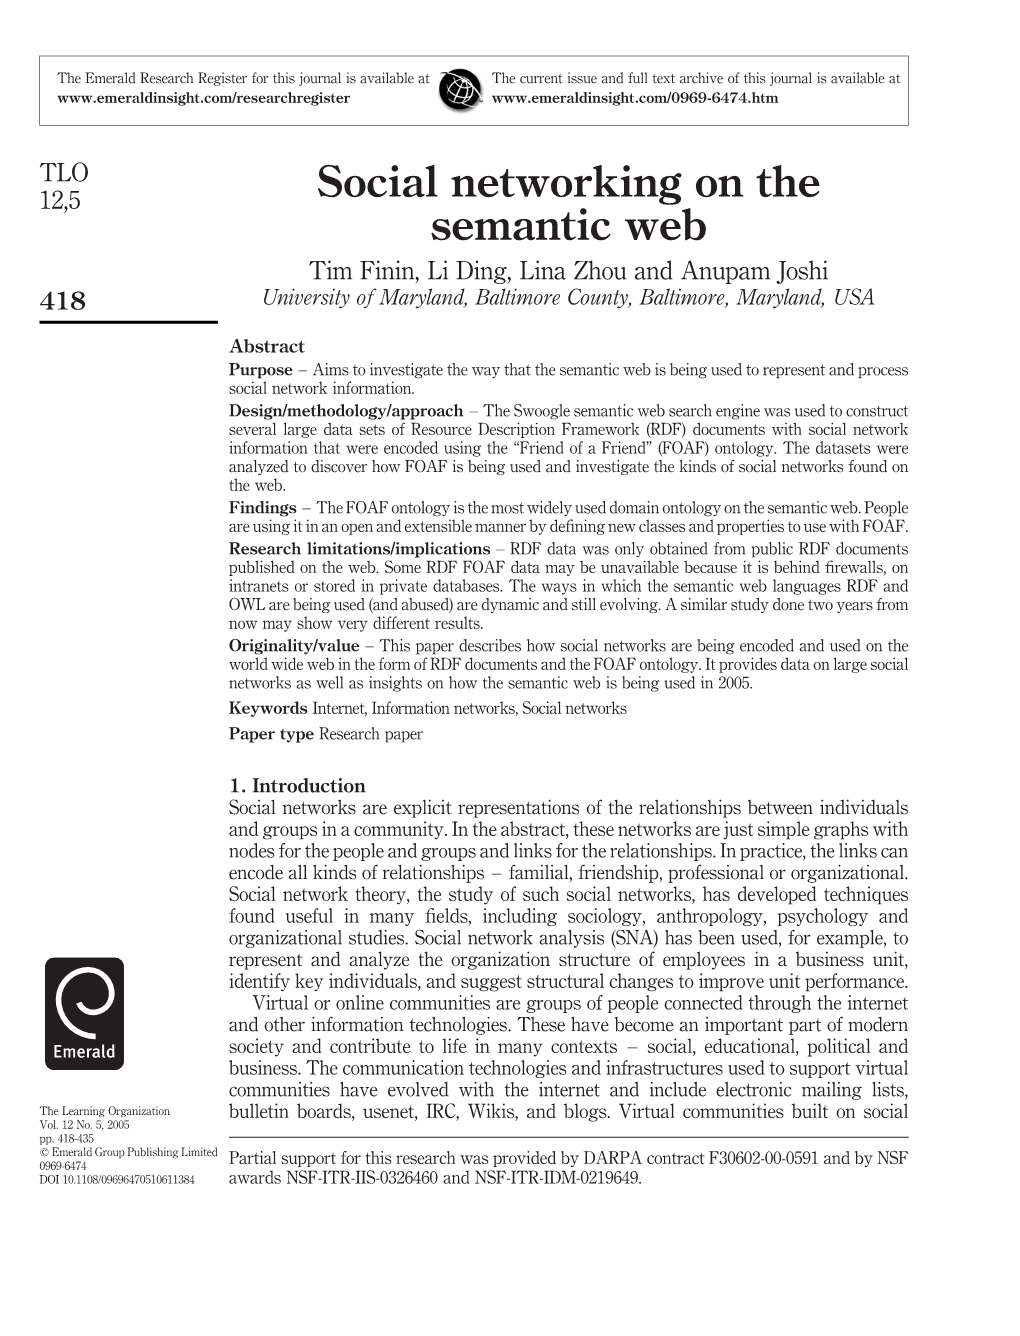 Social Networking on the Semantic Web Tim Finin, Li Ding, Lina Zhou and Anupam Joshi 418 University of Maryland, Baltimore County, Baltimore, Maryland, USA